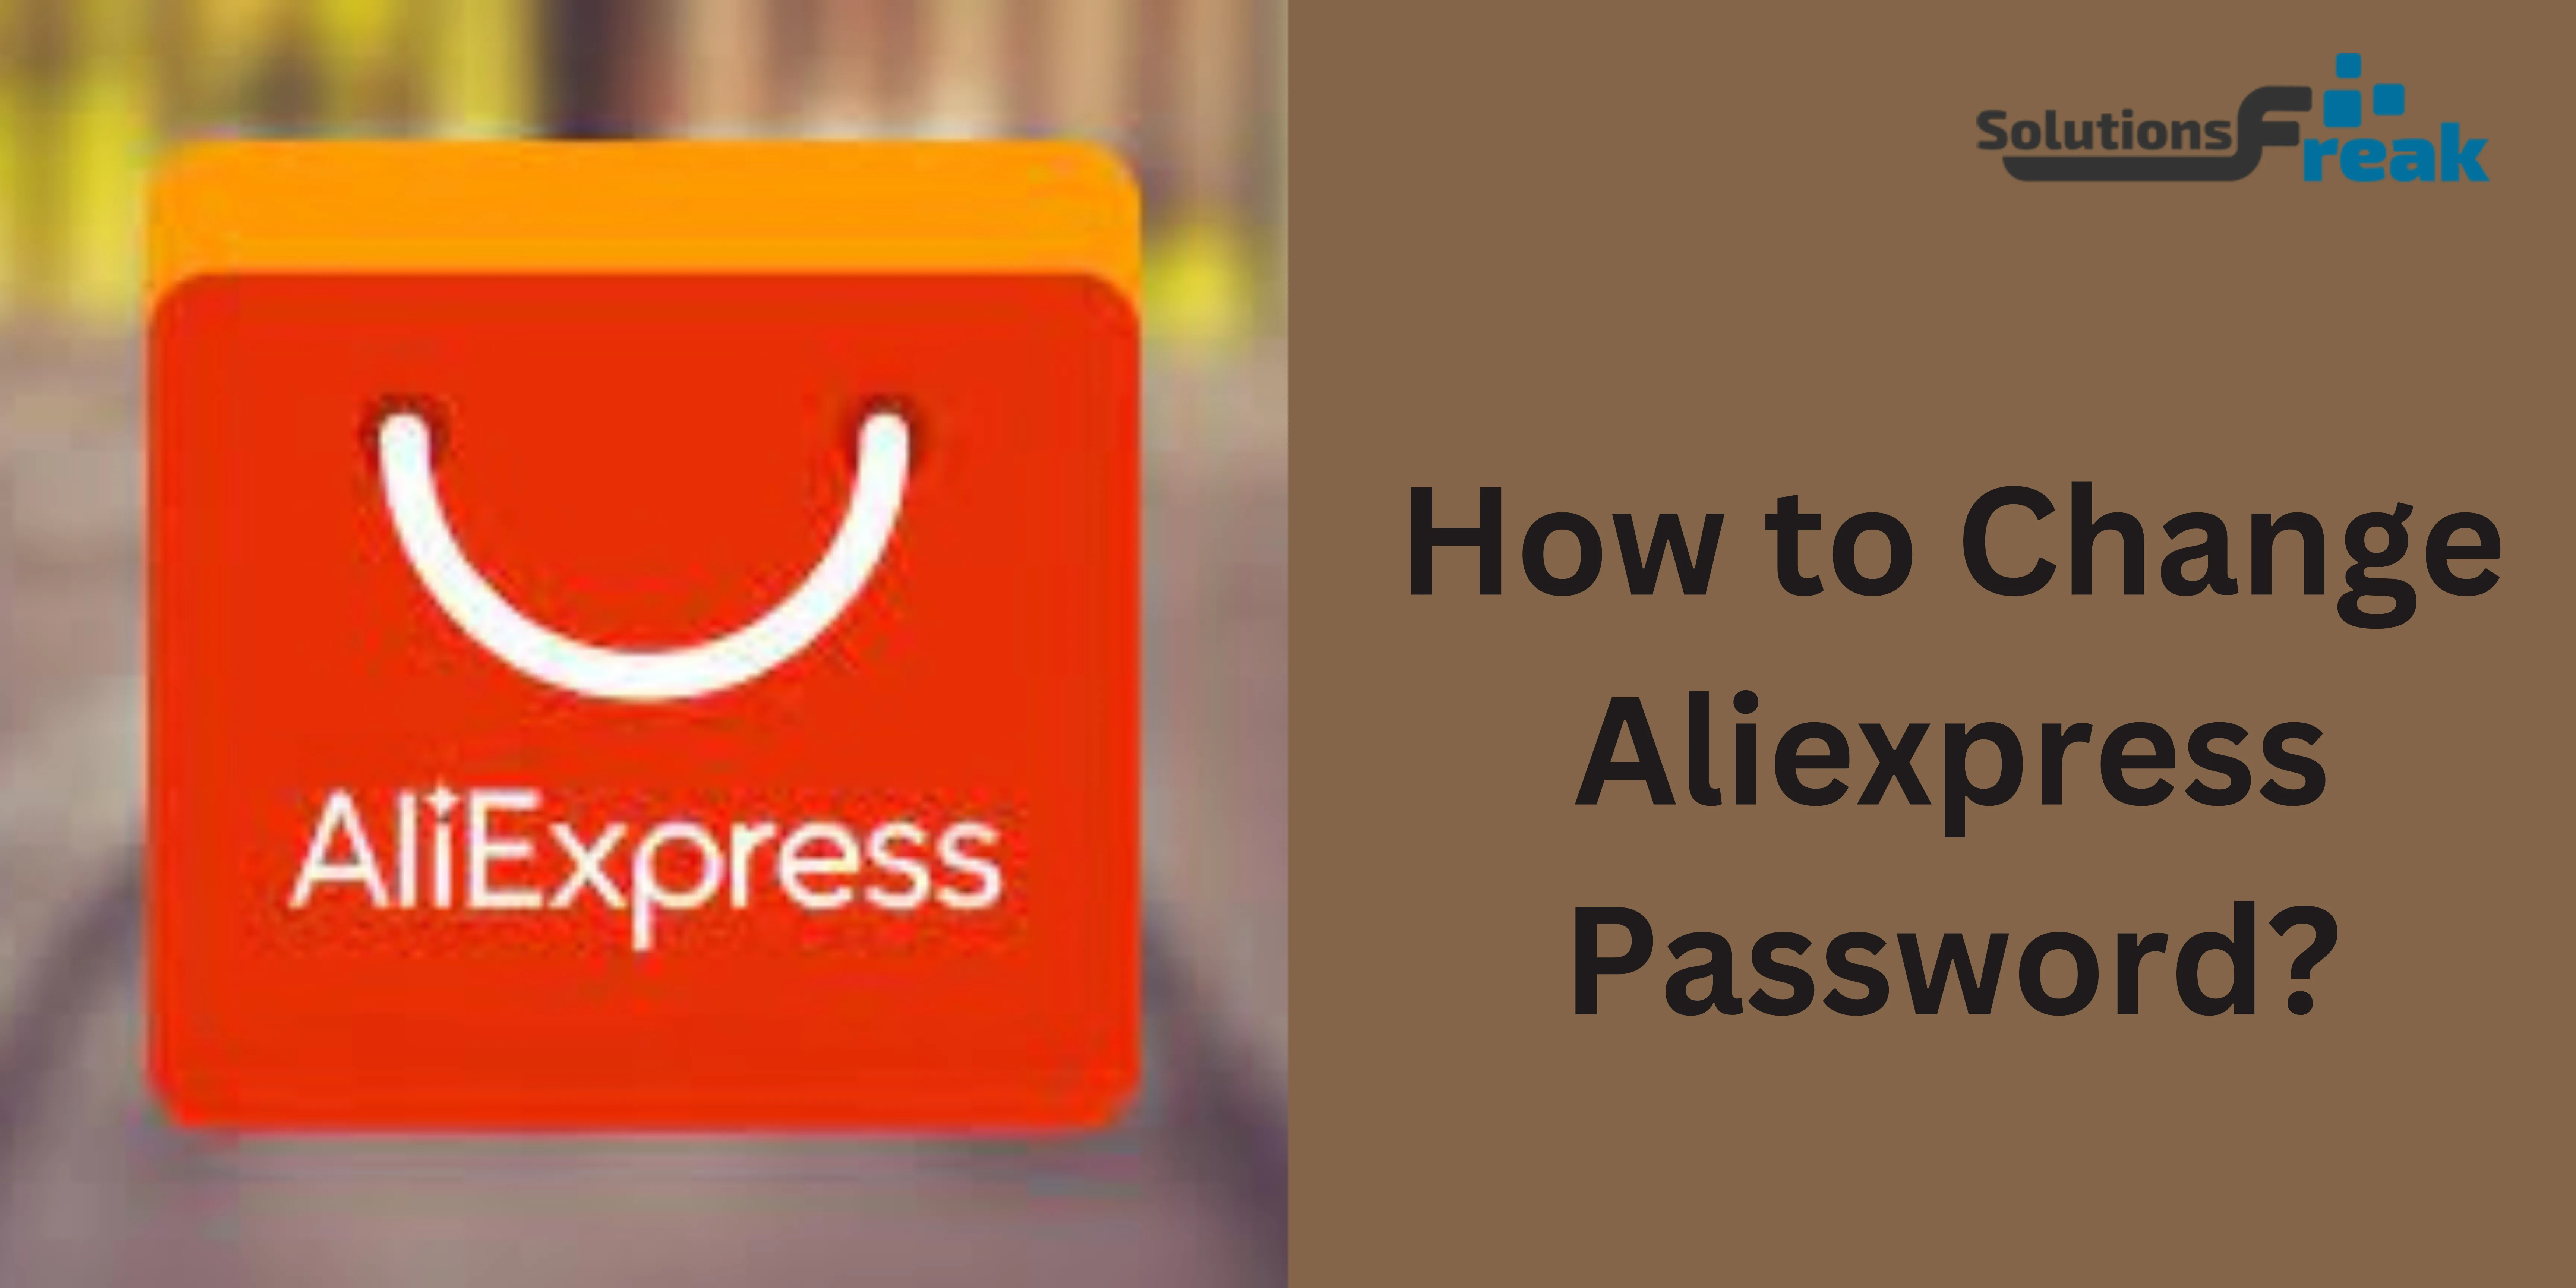 How to Change Aliexpress Password